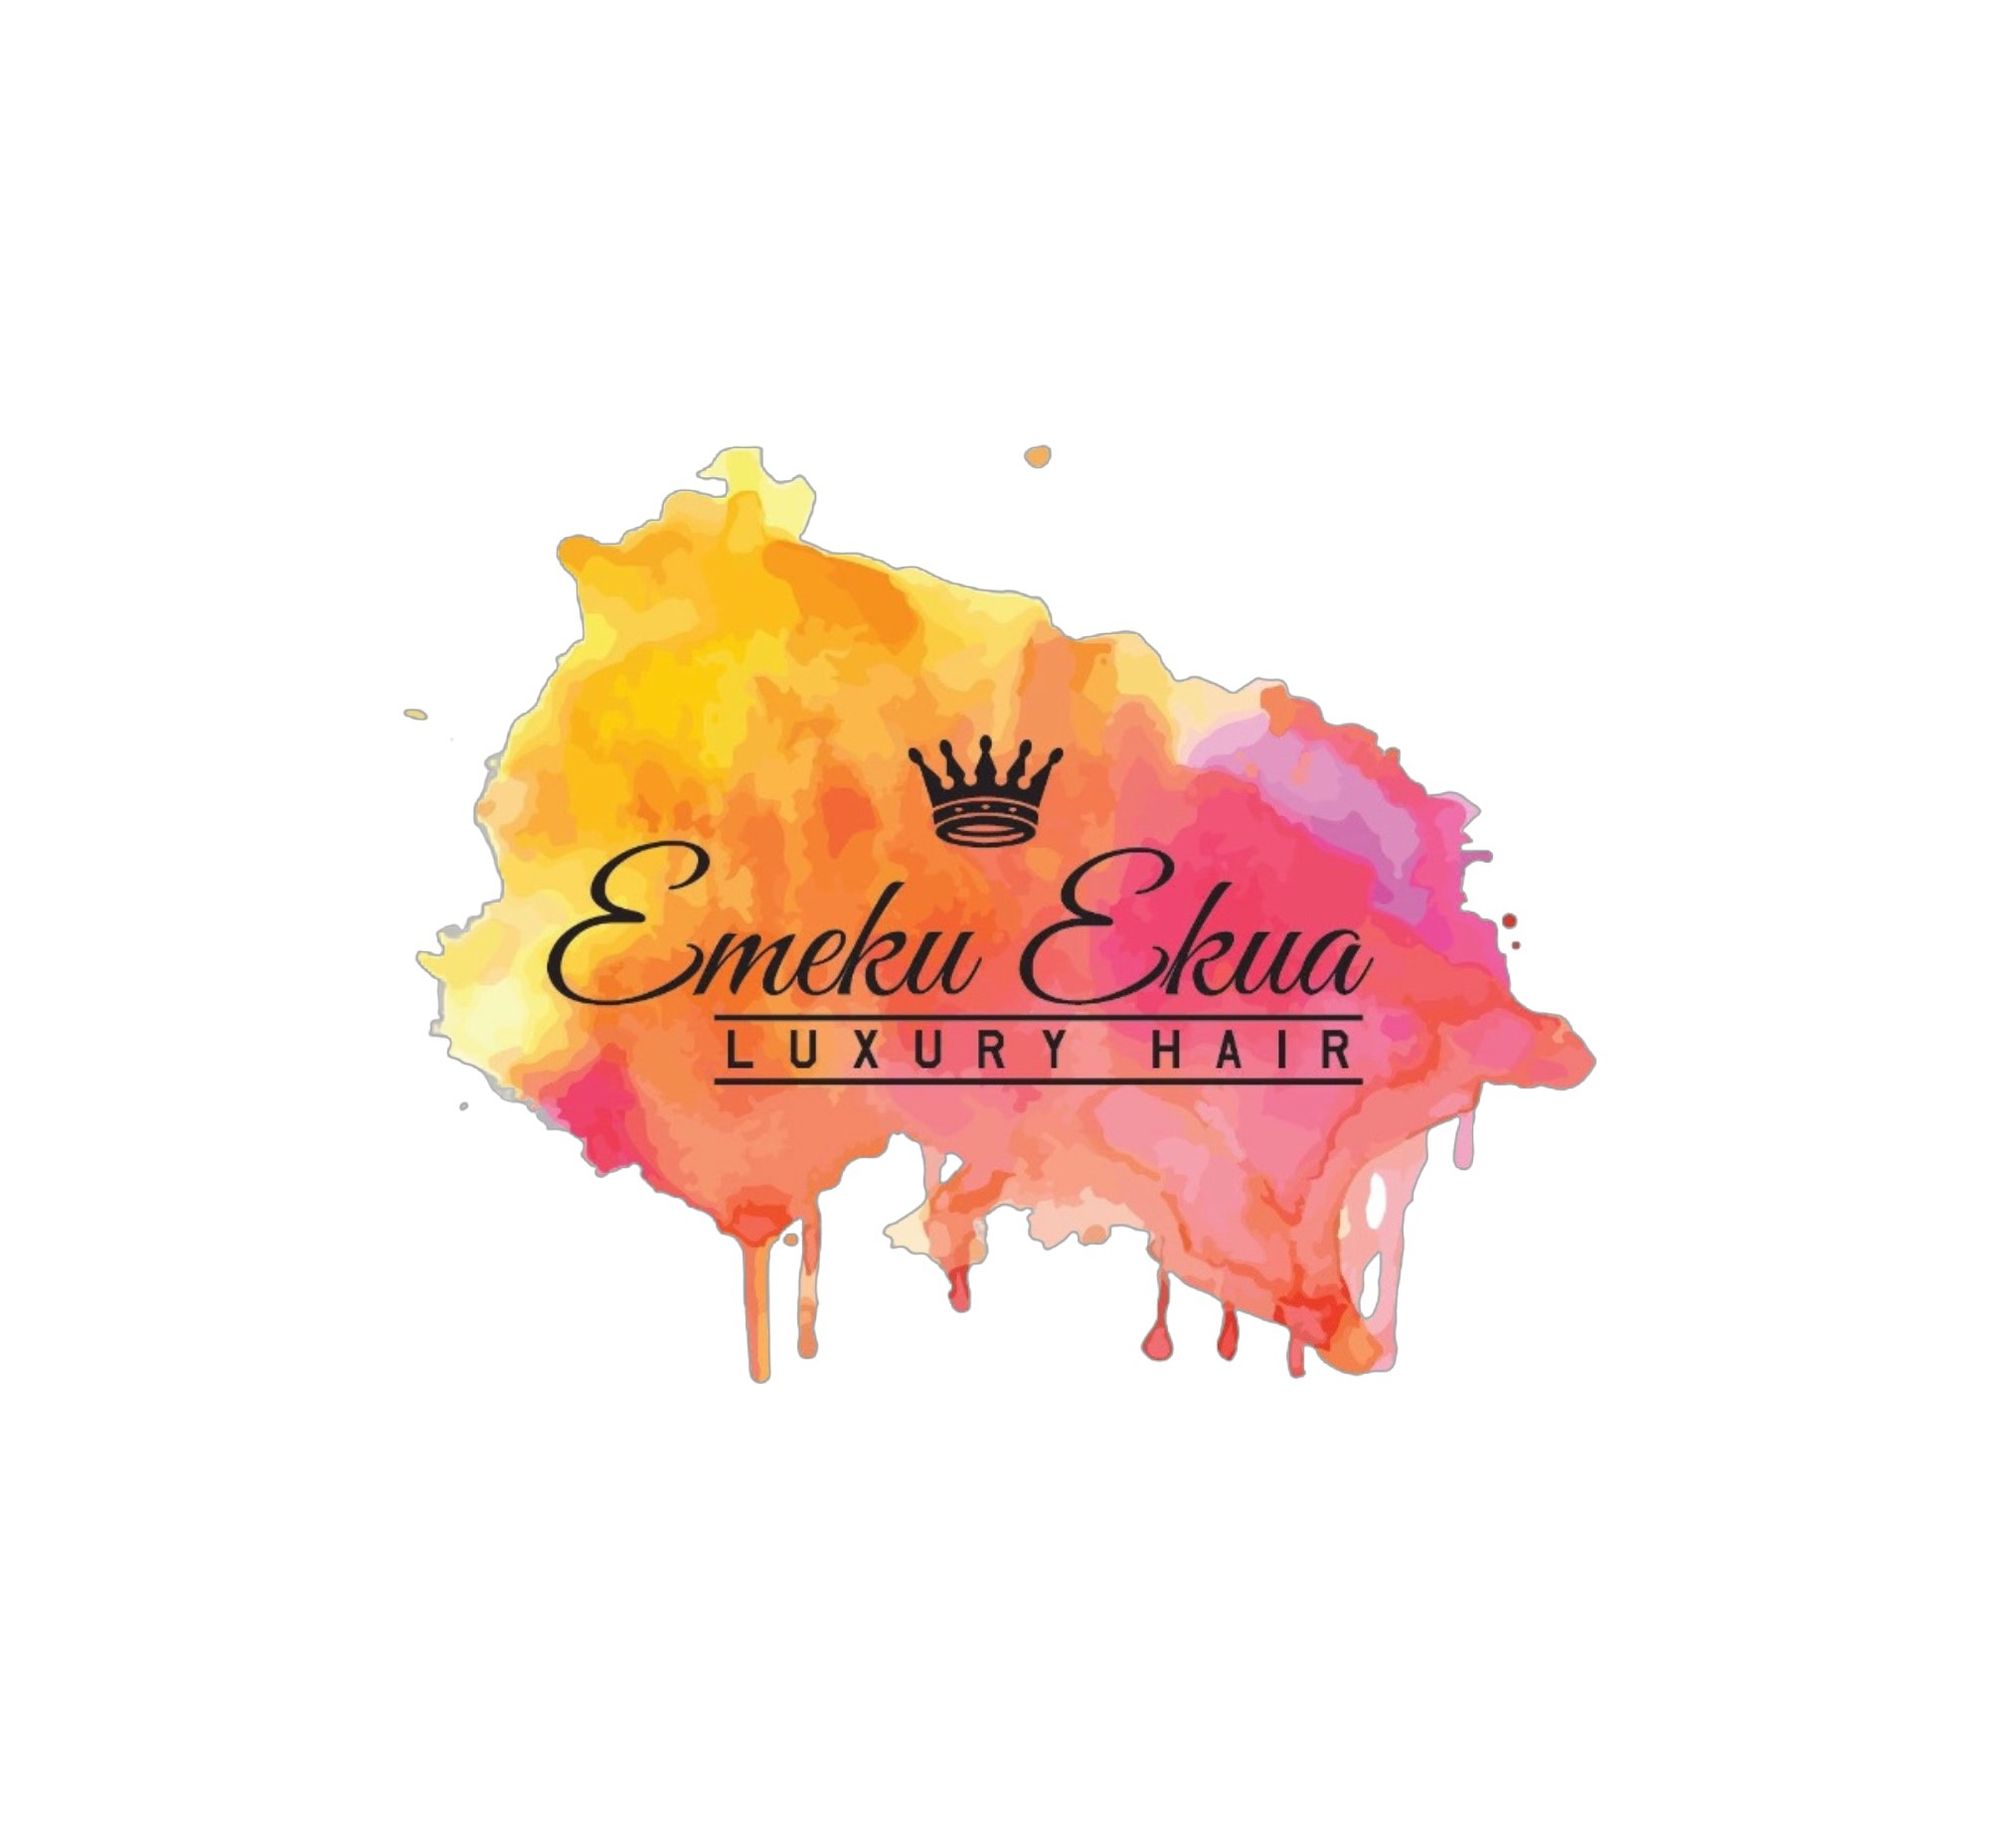 A Luxury Experience - Emeku Ekua Luxury Hair